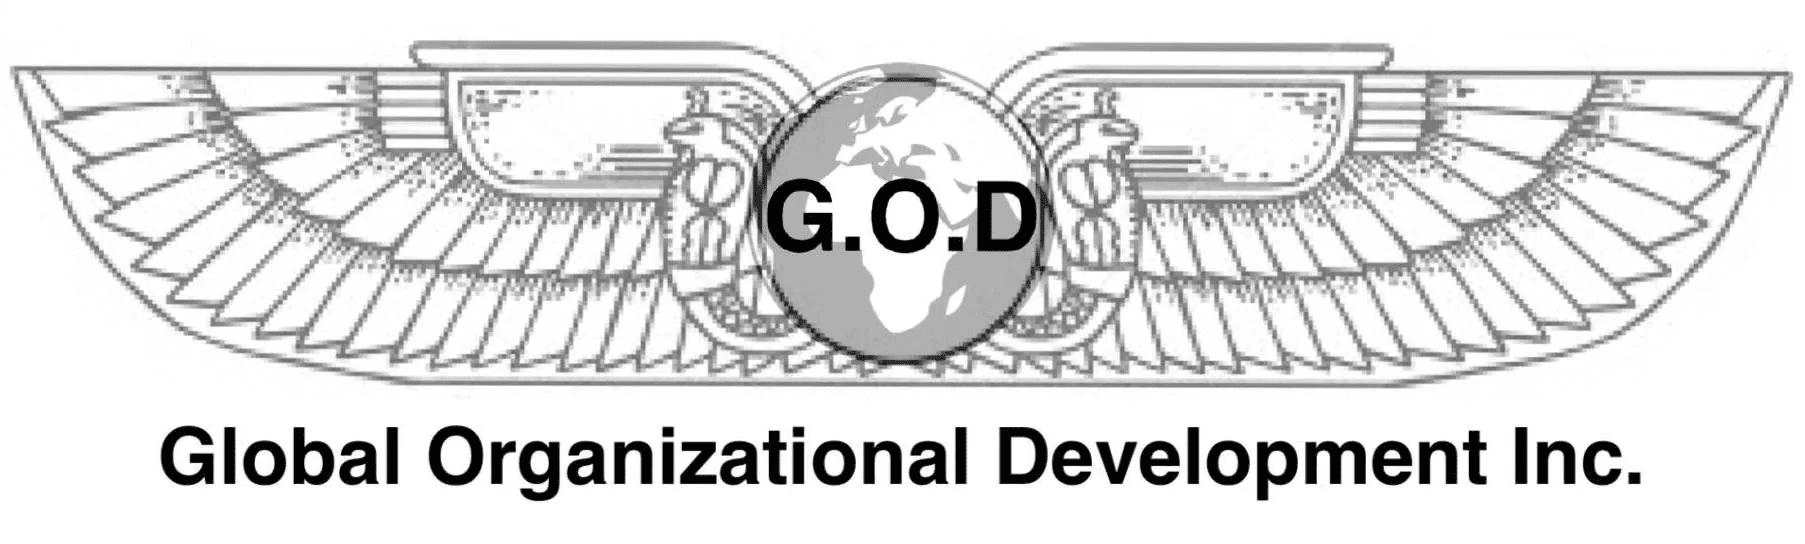 Global Organizational Development Inc.